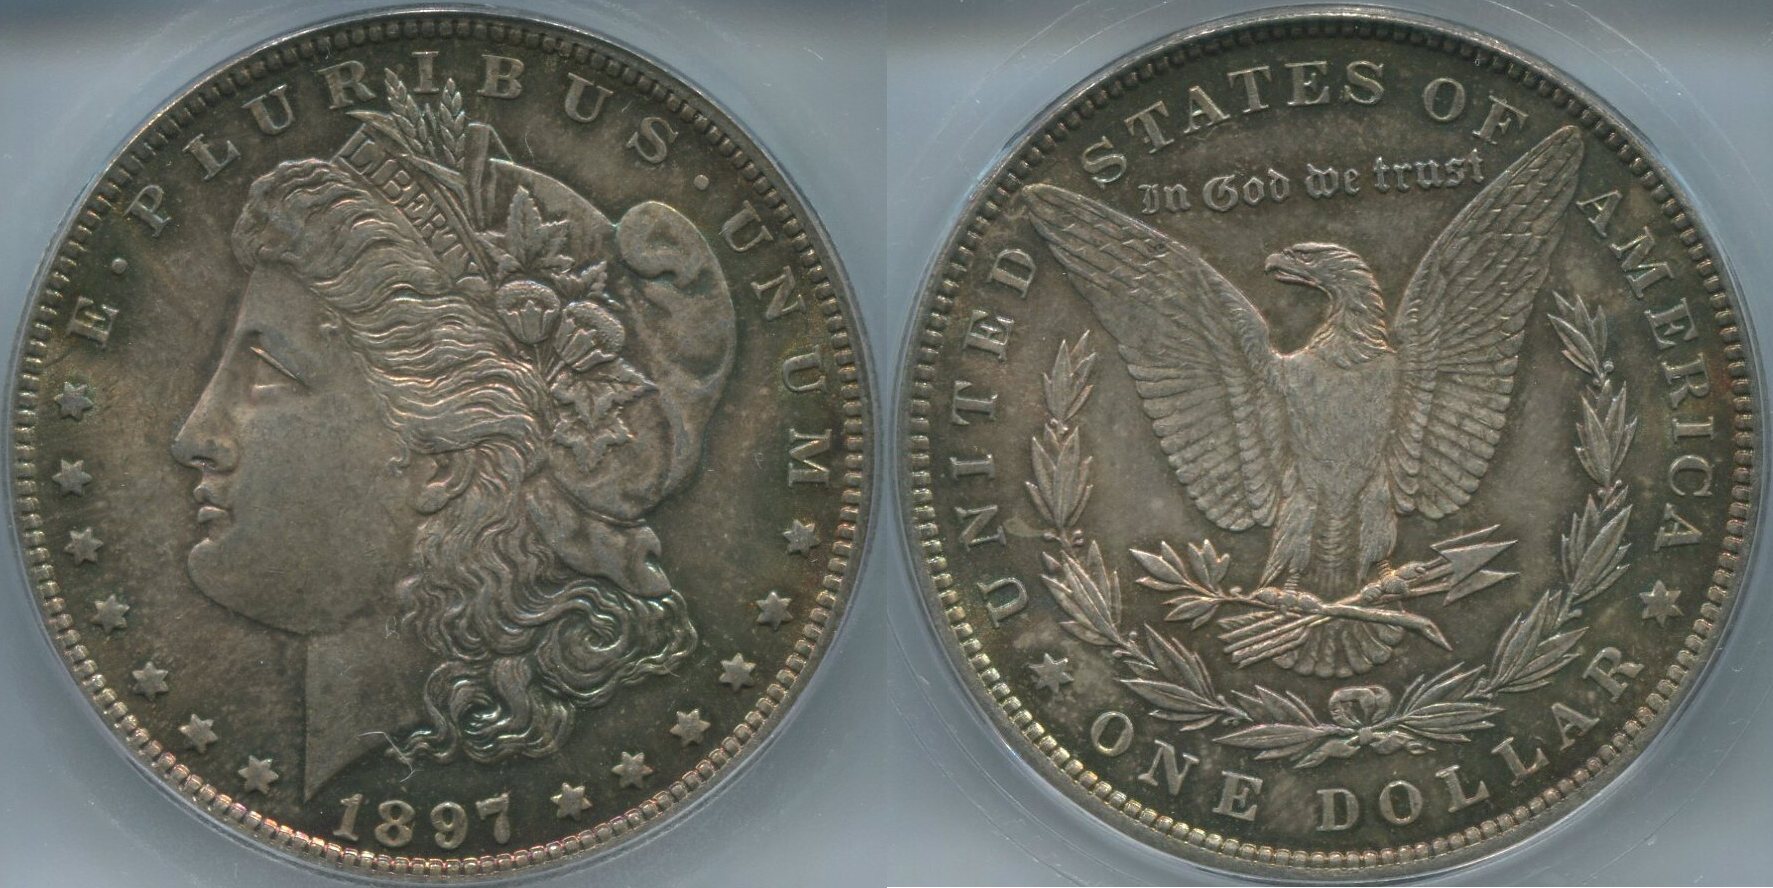 USA 1 Dollar 1897 ~ Morgan Dollar ~ ICG MS64 | MA-Shops